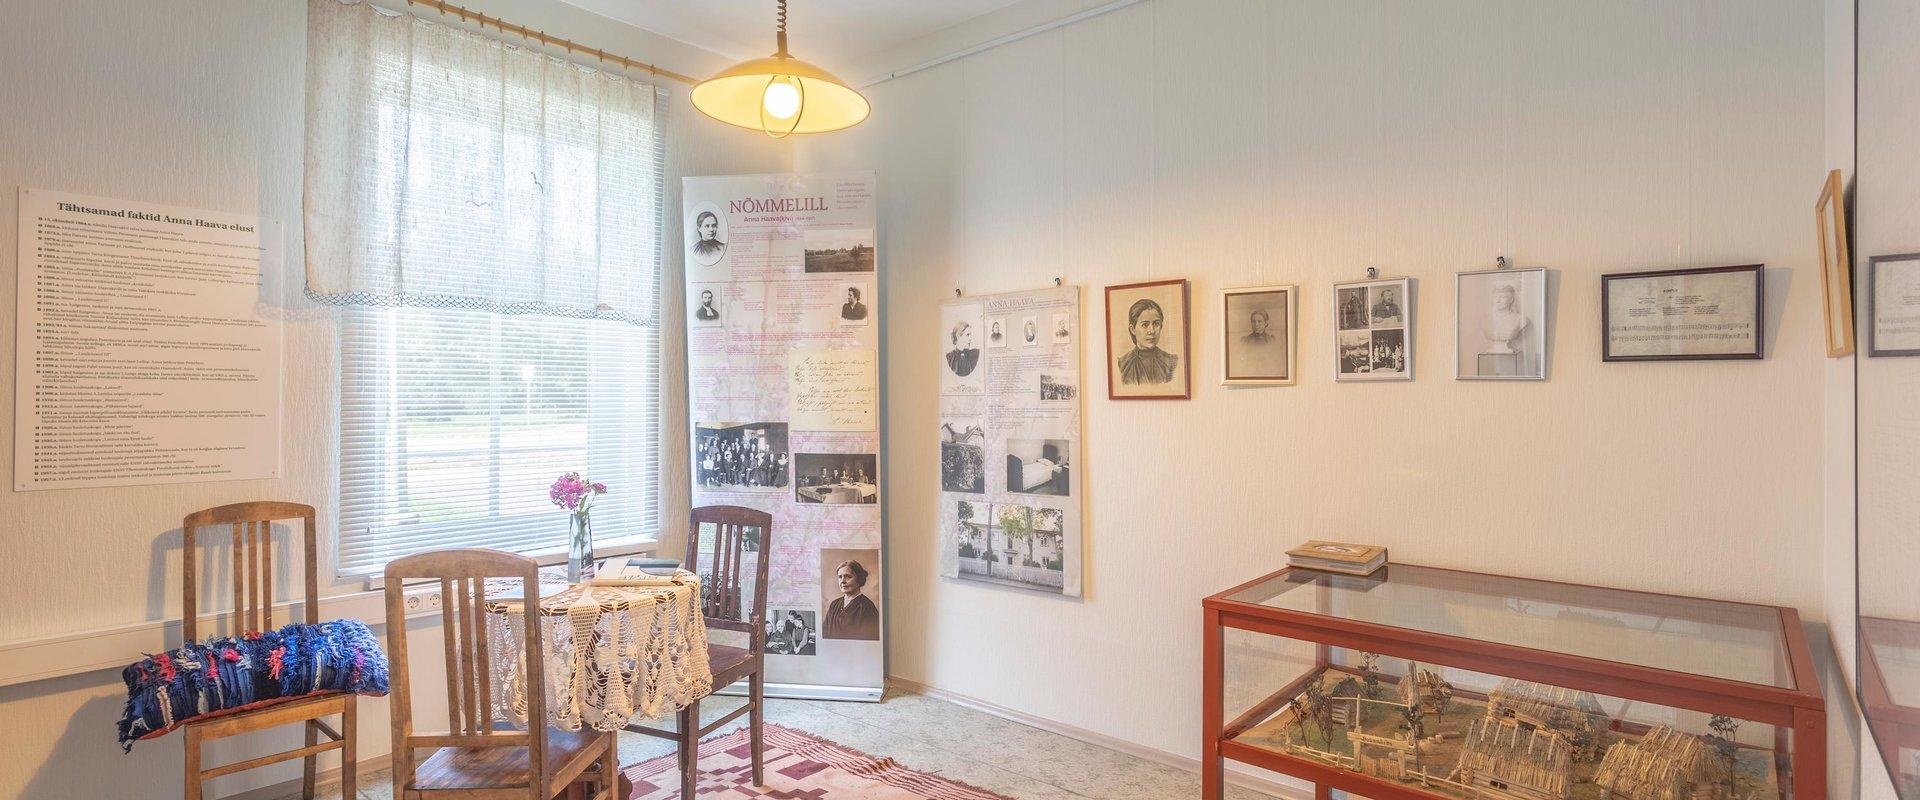 Memorial room for Anna Haava in Kodavere Heritage Centre